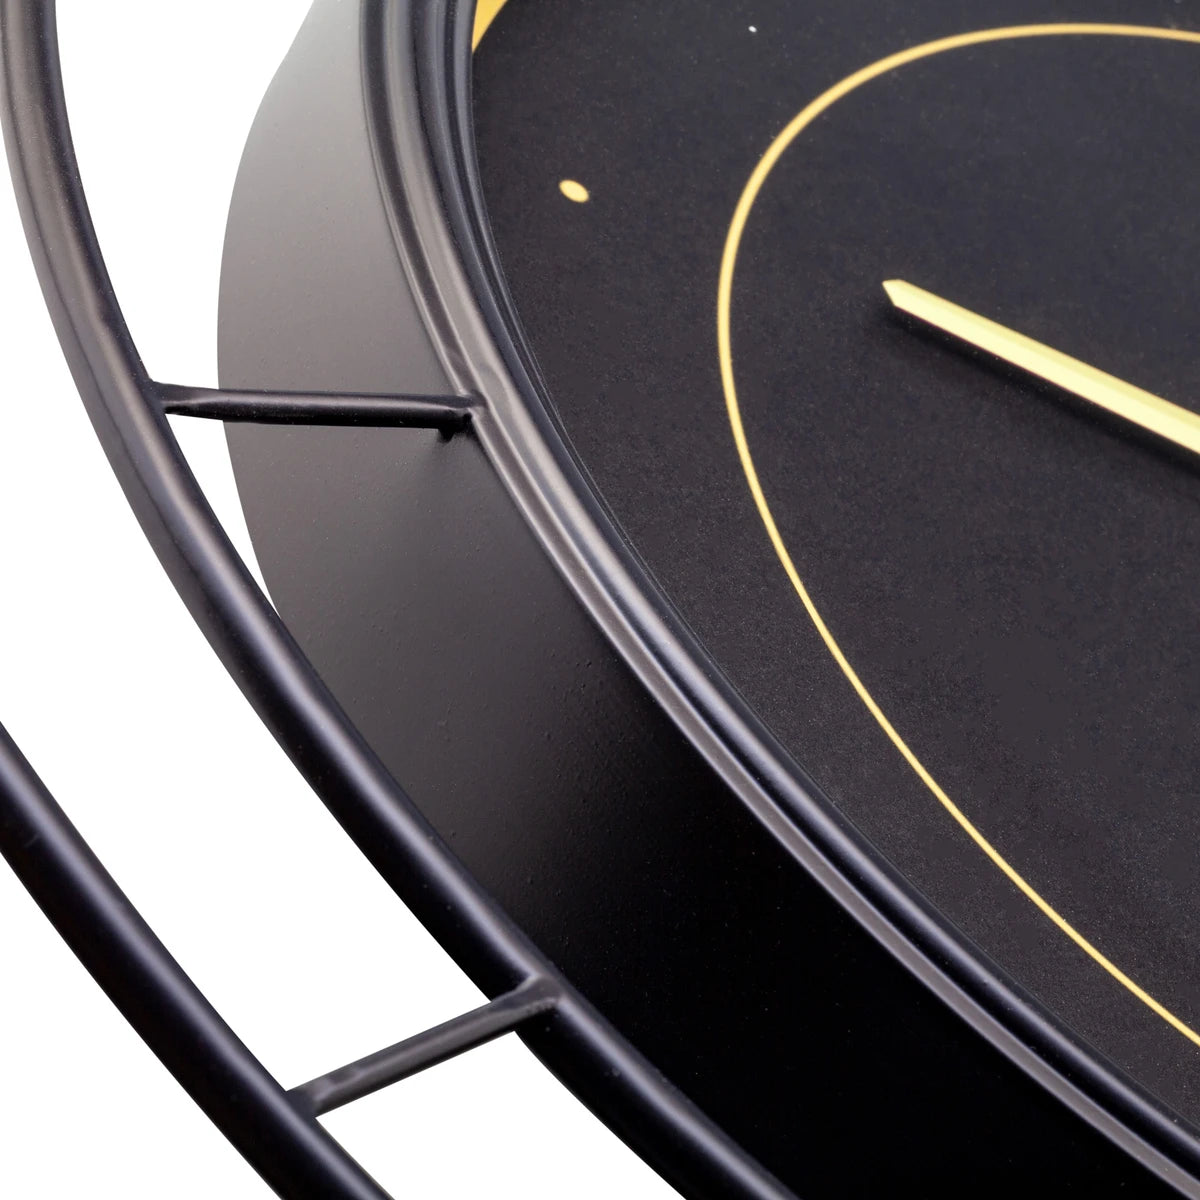 NEXTIME - Orologio da Parete Fancy 70cm